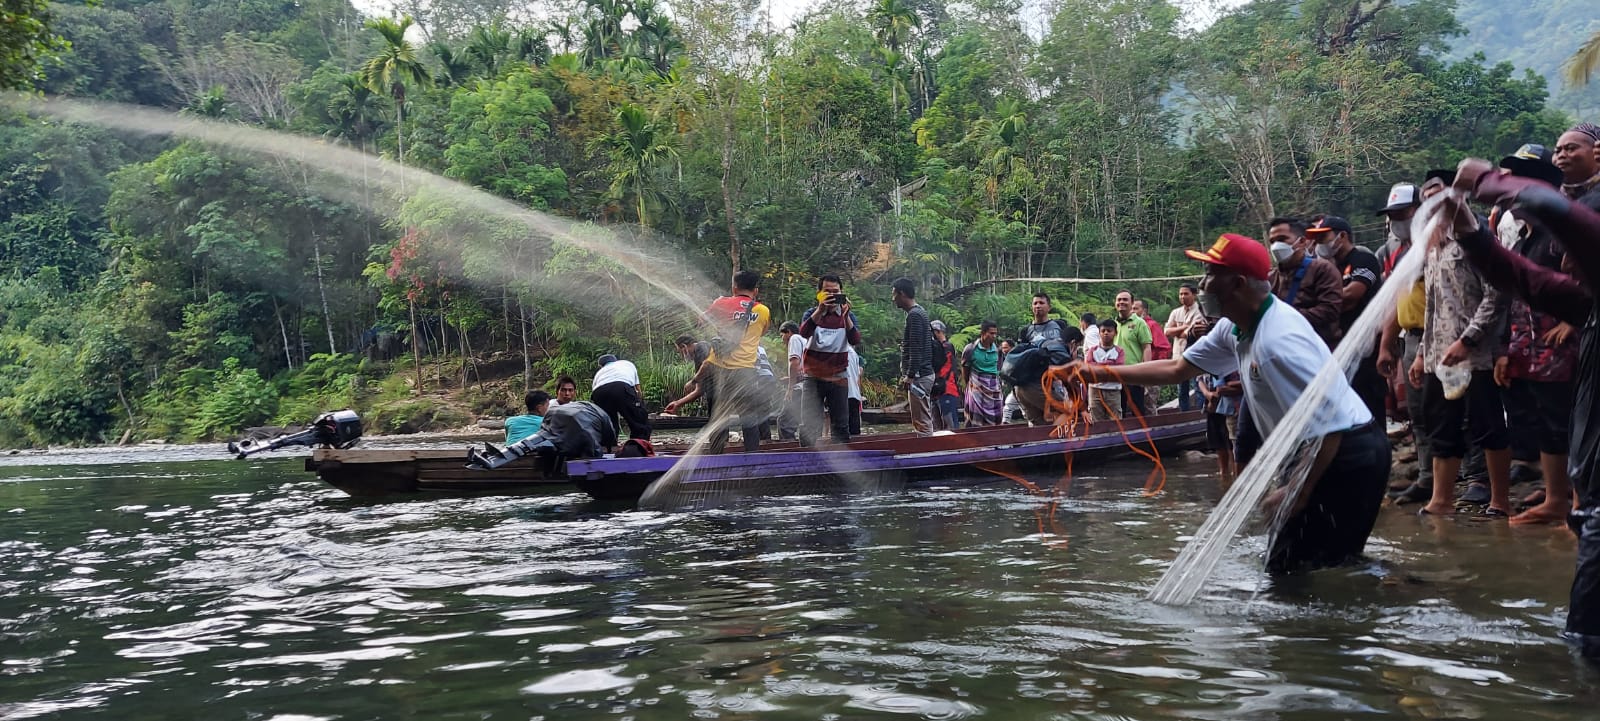 Gubernur Sumbar, Mahyeldi, mencoba melempar jala bersama masyarakat Jorong V Pertemuan, Nagari Muaro Sungai Lolo, Pasaman.